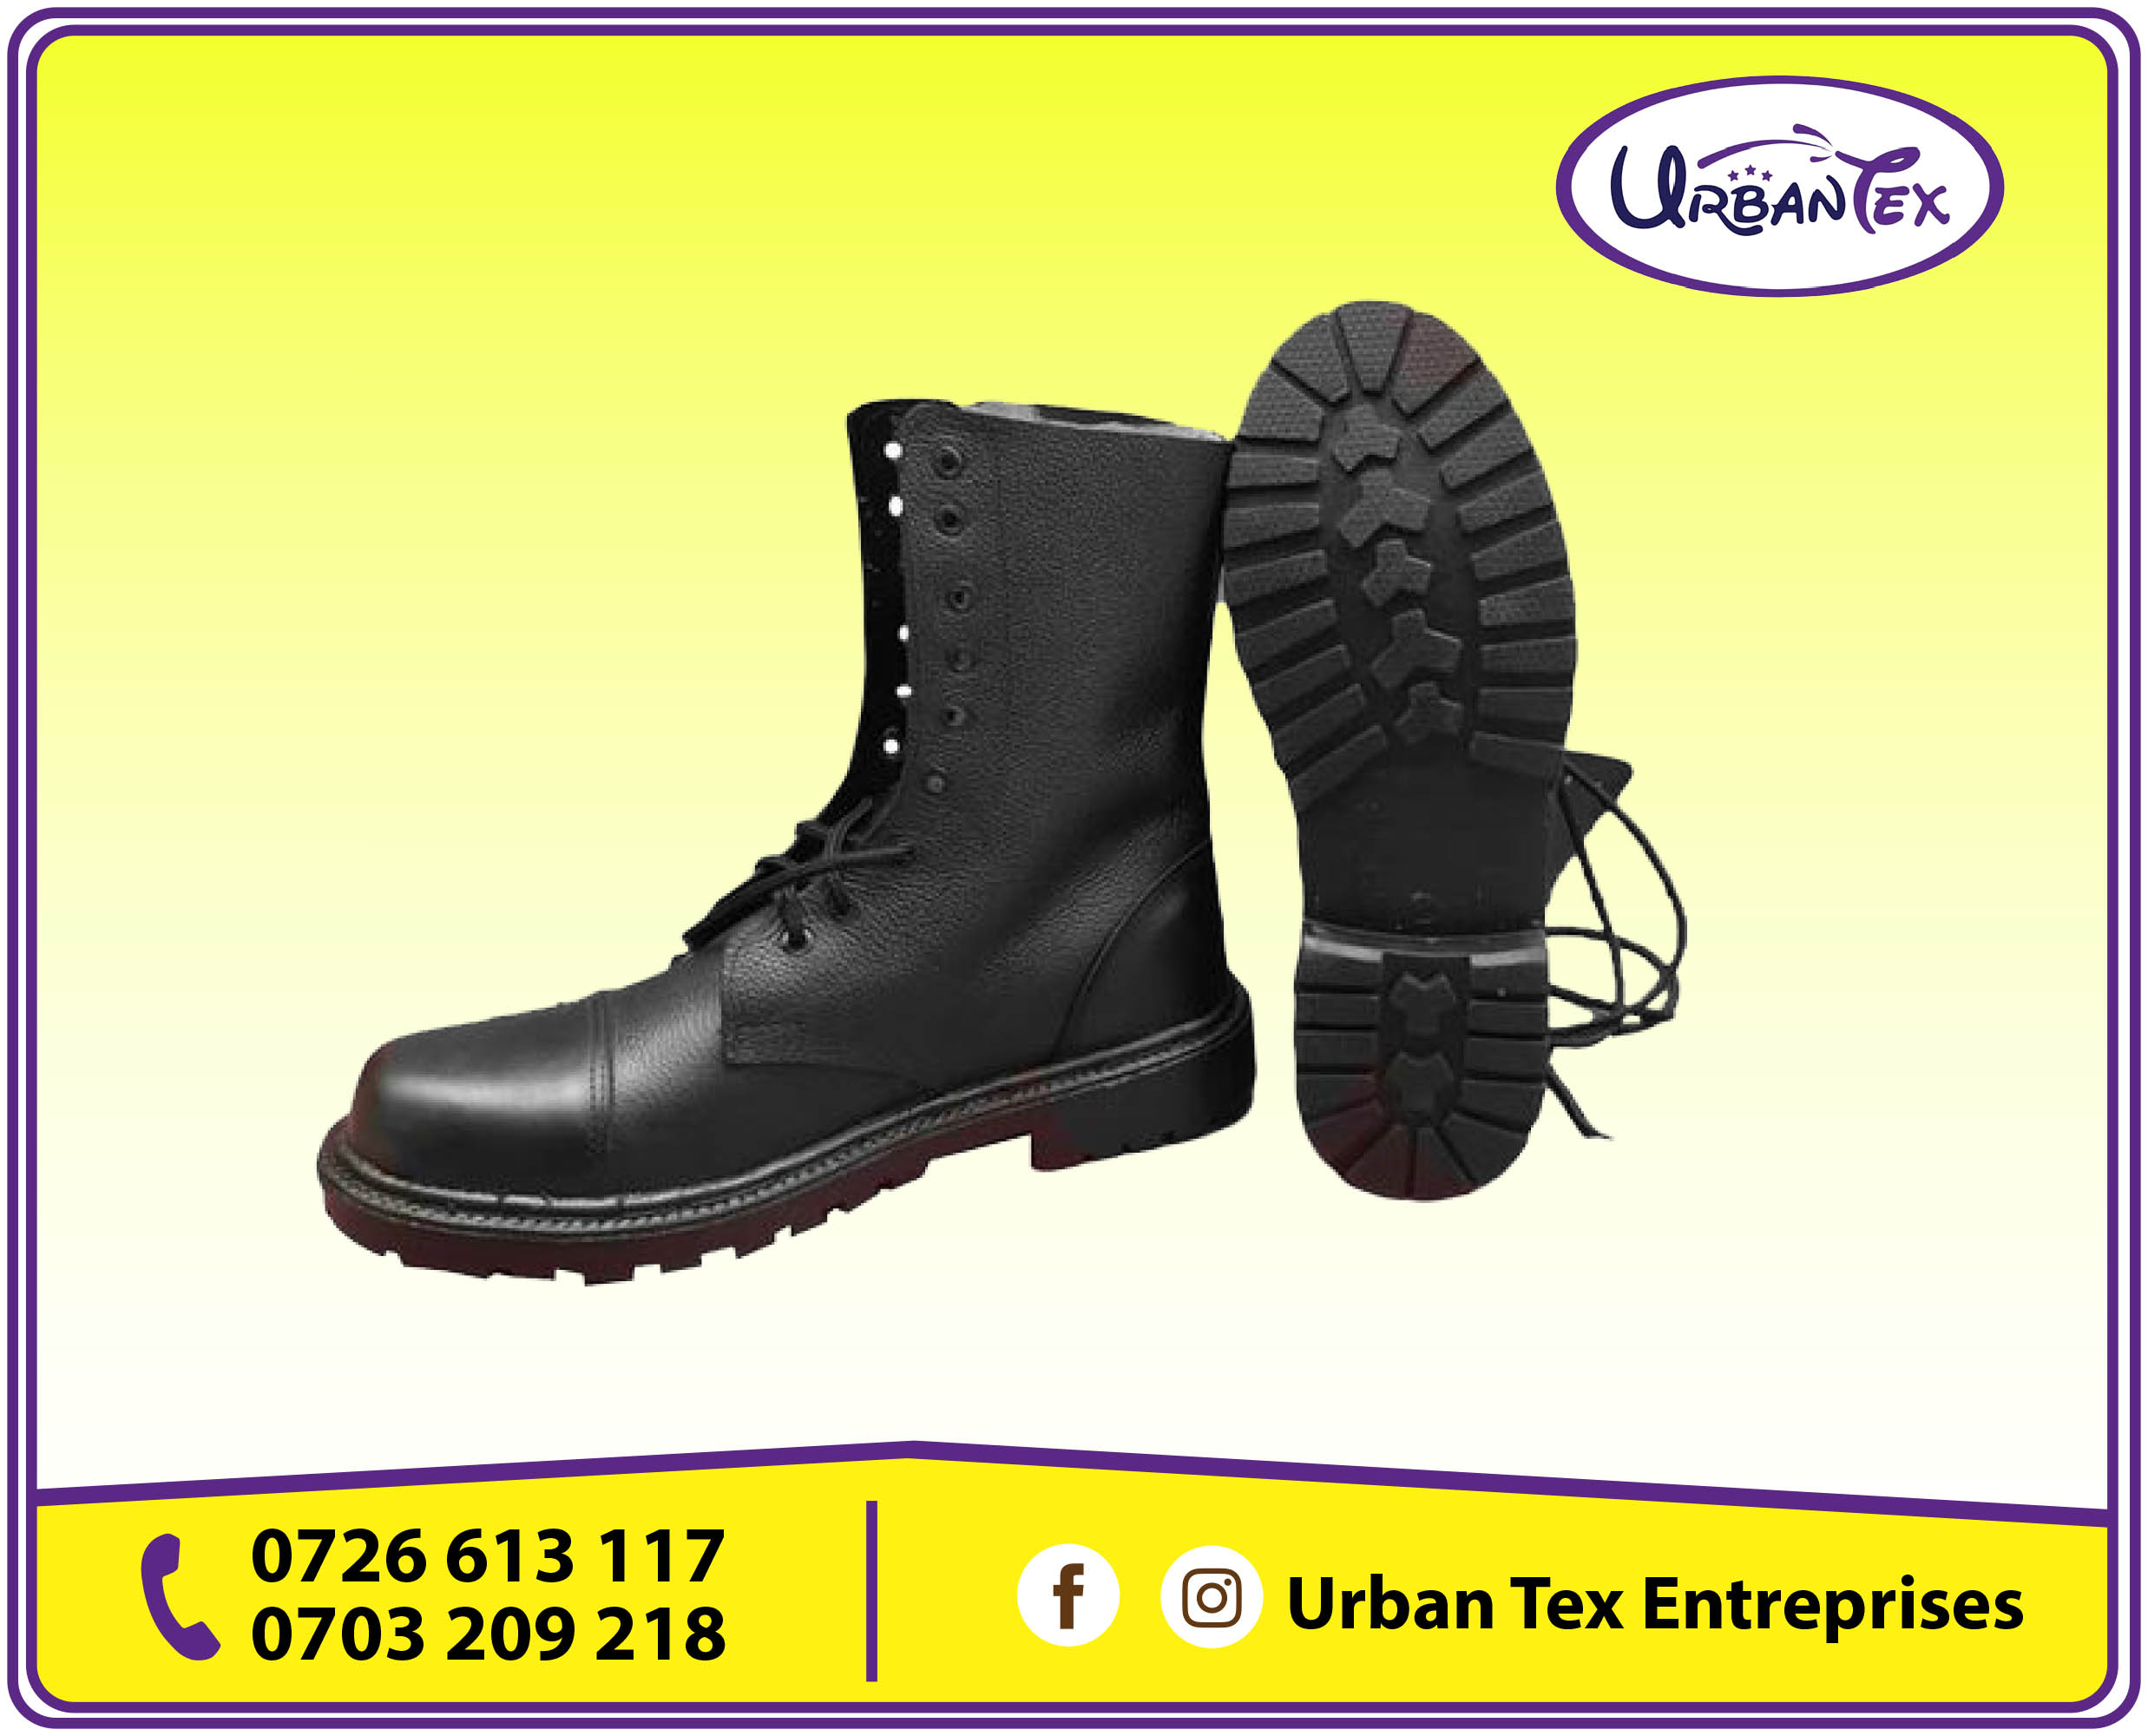 Military Boots Suppliers in Nairobi - Urban Tex Enterprises